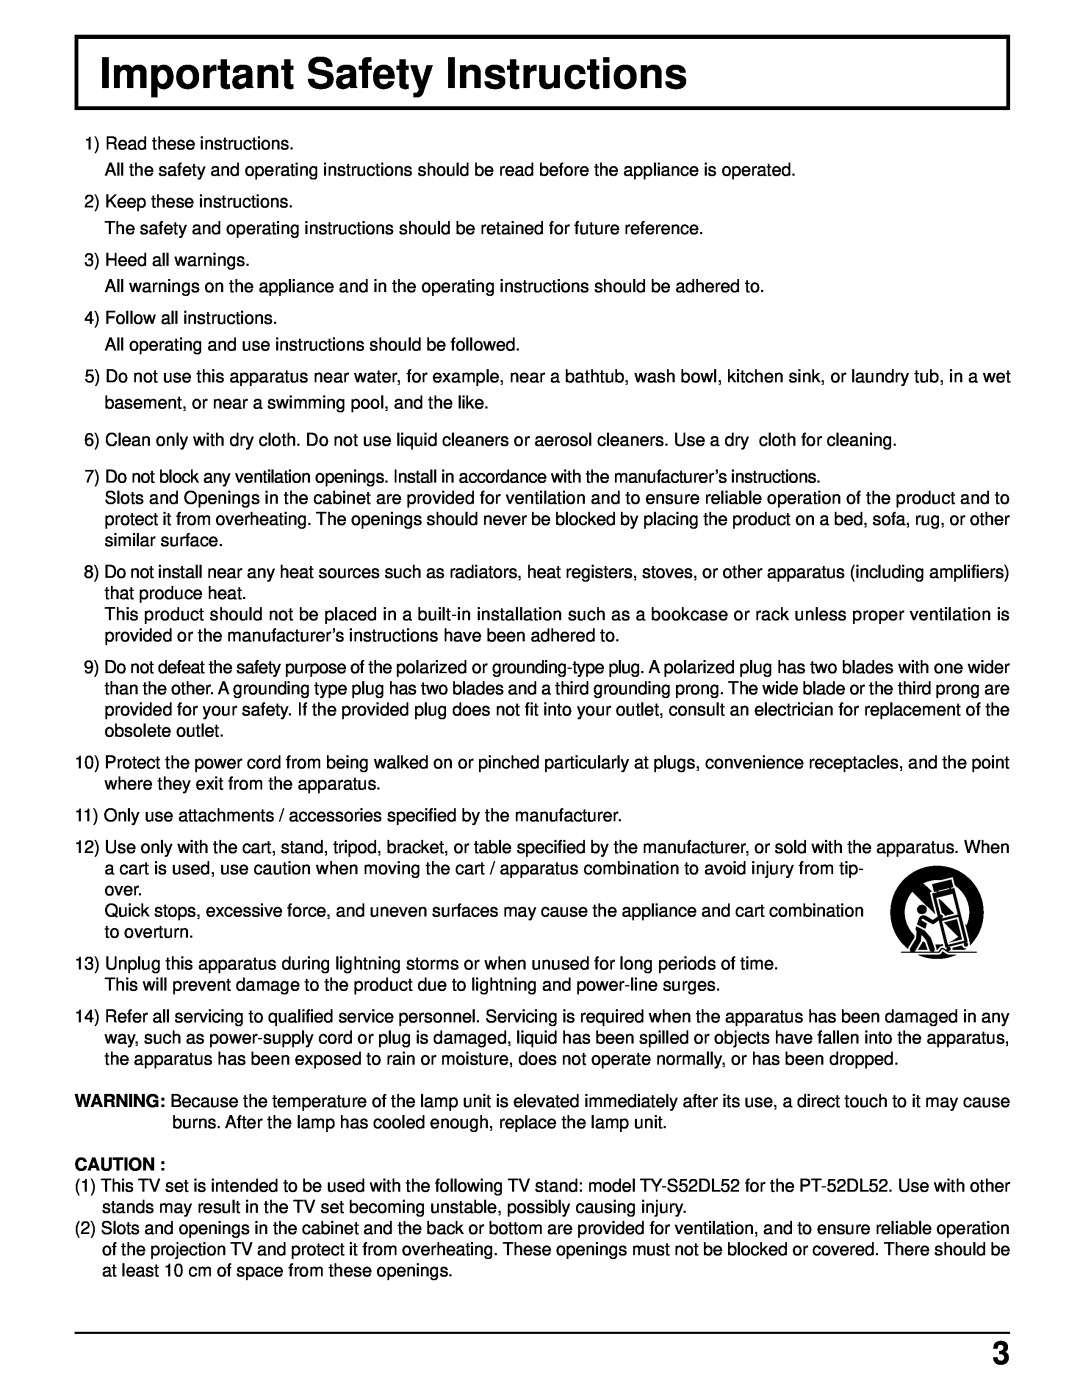 Panasonic PT 52DL52 manual Important Safety Instructions 